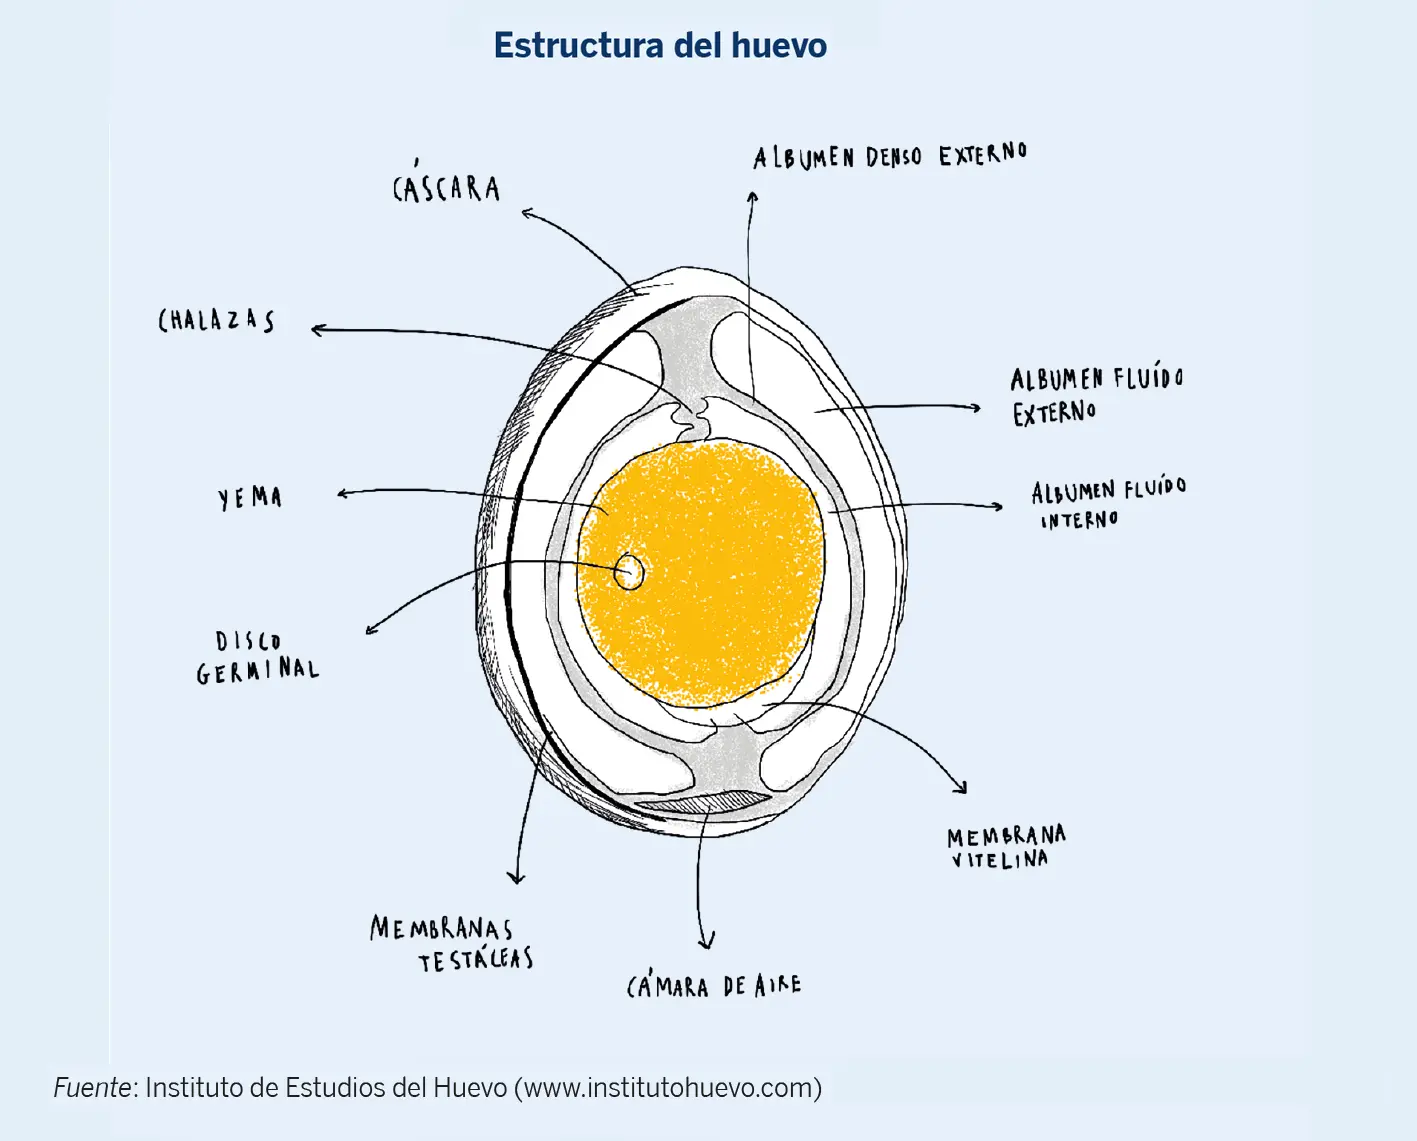 Figura 1. Estructura del huevo